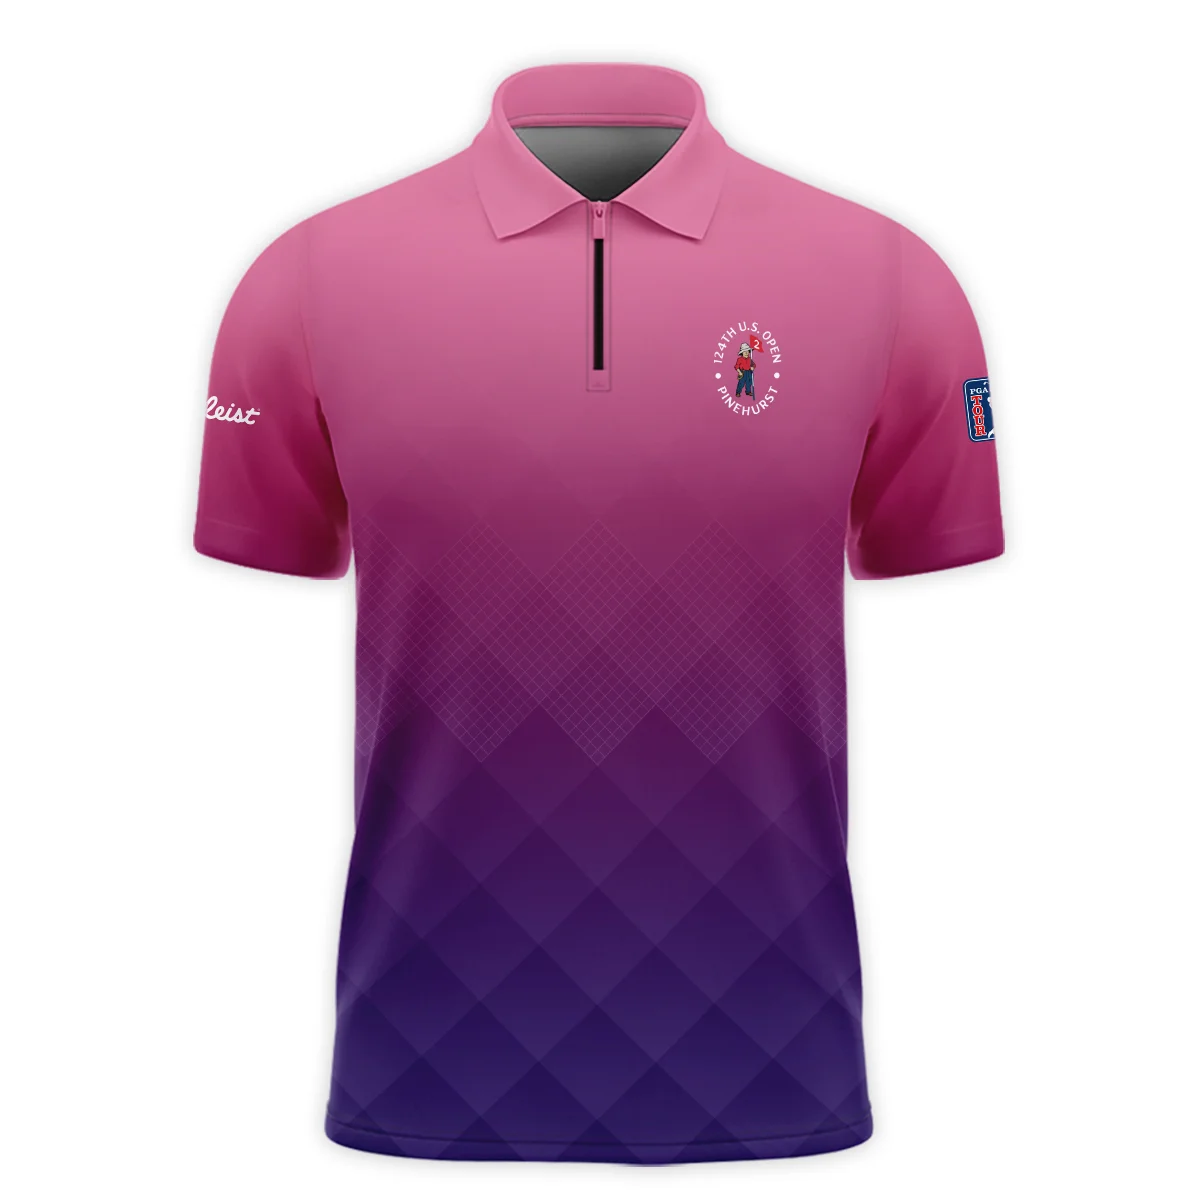 Titleist 124th U.S. Open Pinehurst Purple Pink Gradient Abstract Hoodie Shirt Style Classic